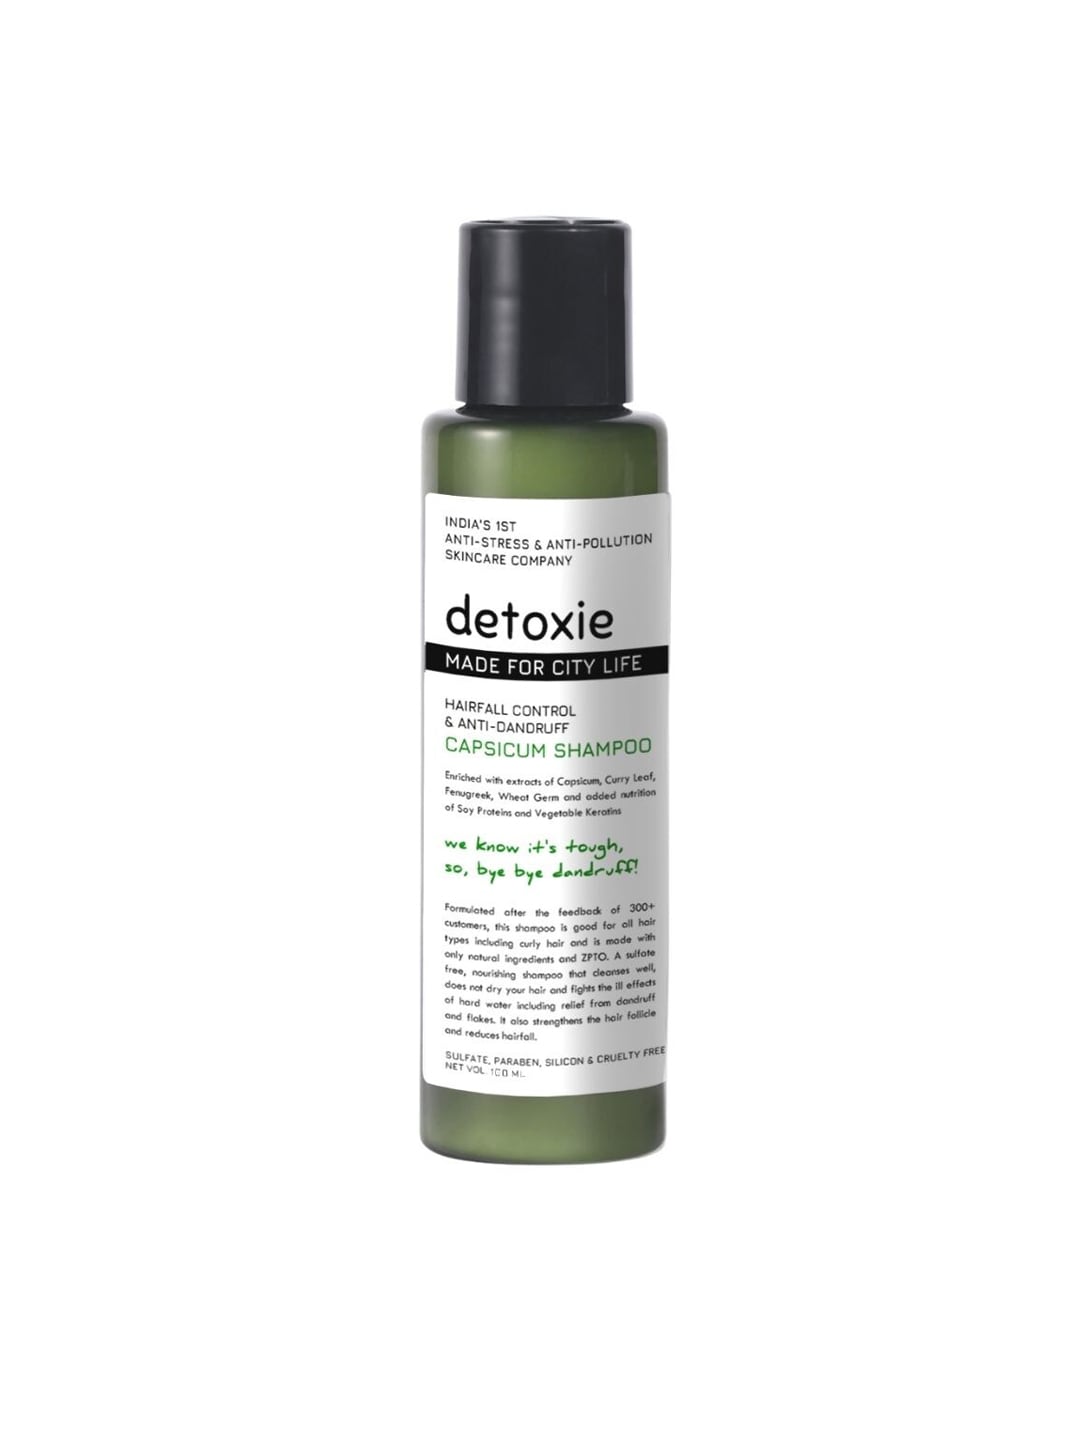 Detoxie Anti-Dandruff & Flake Relief Capsicum Shampoo  100 ml Price in India